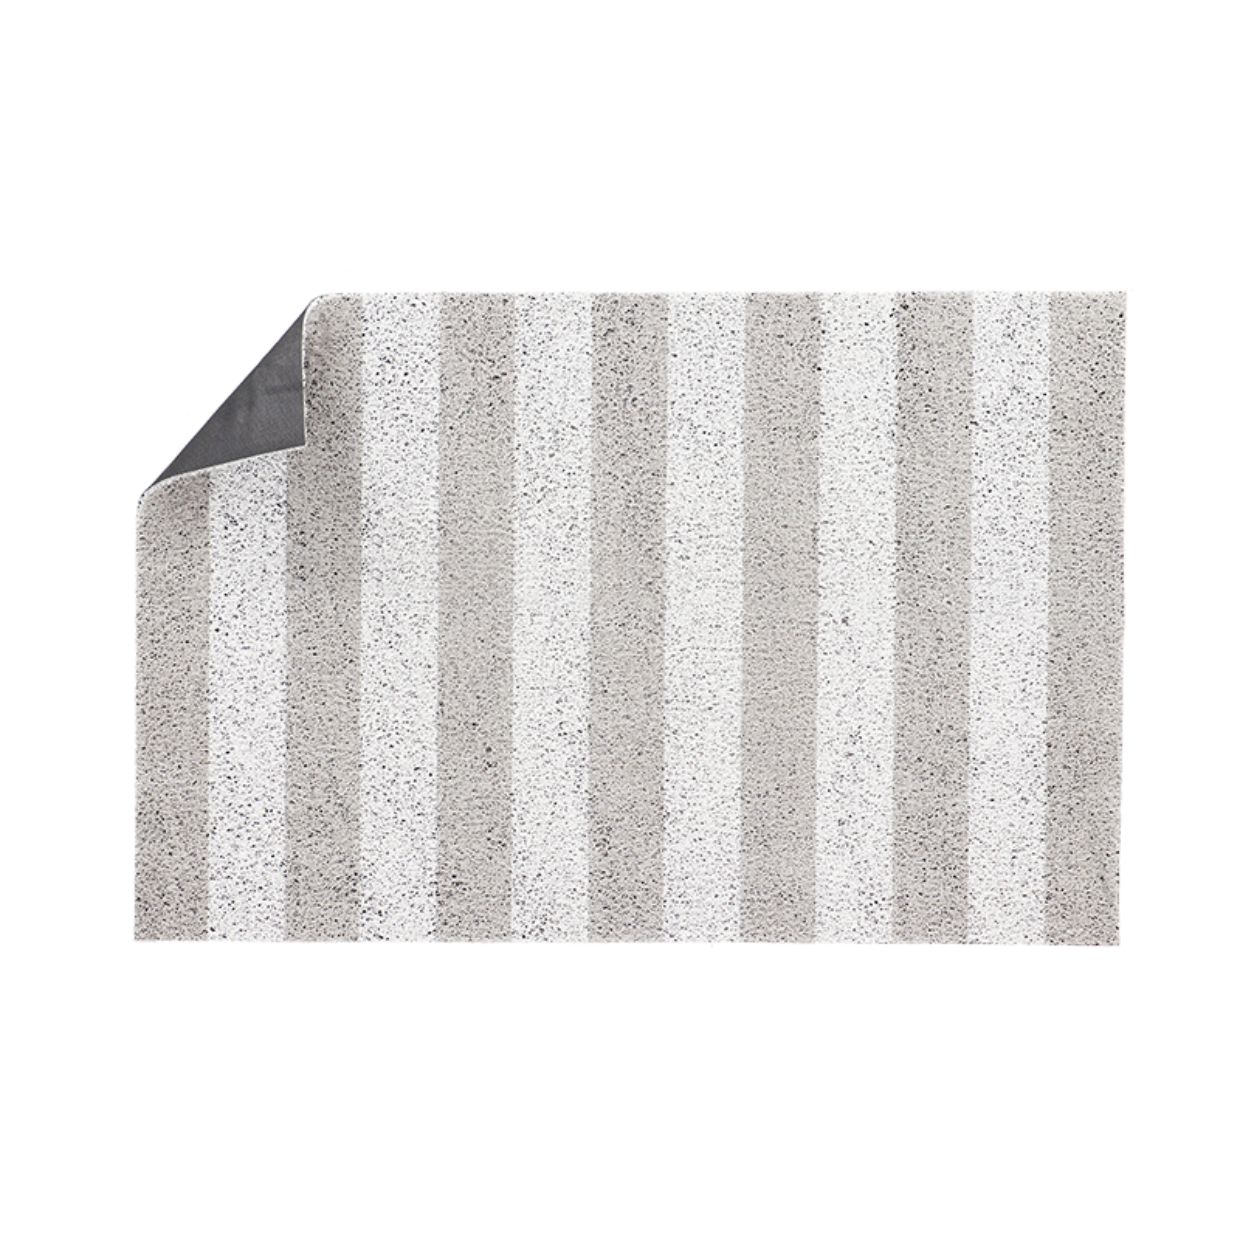 Underlay Doormat Stripes